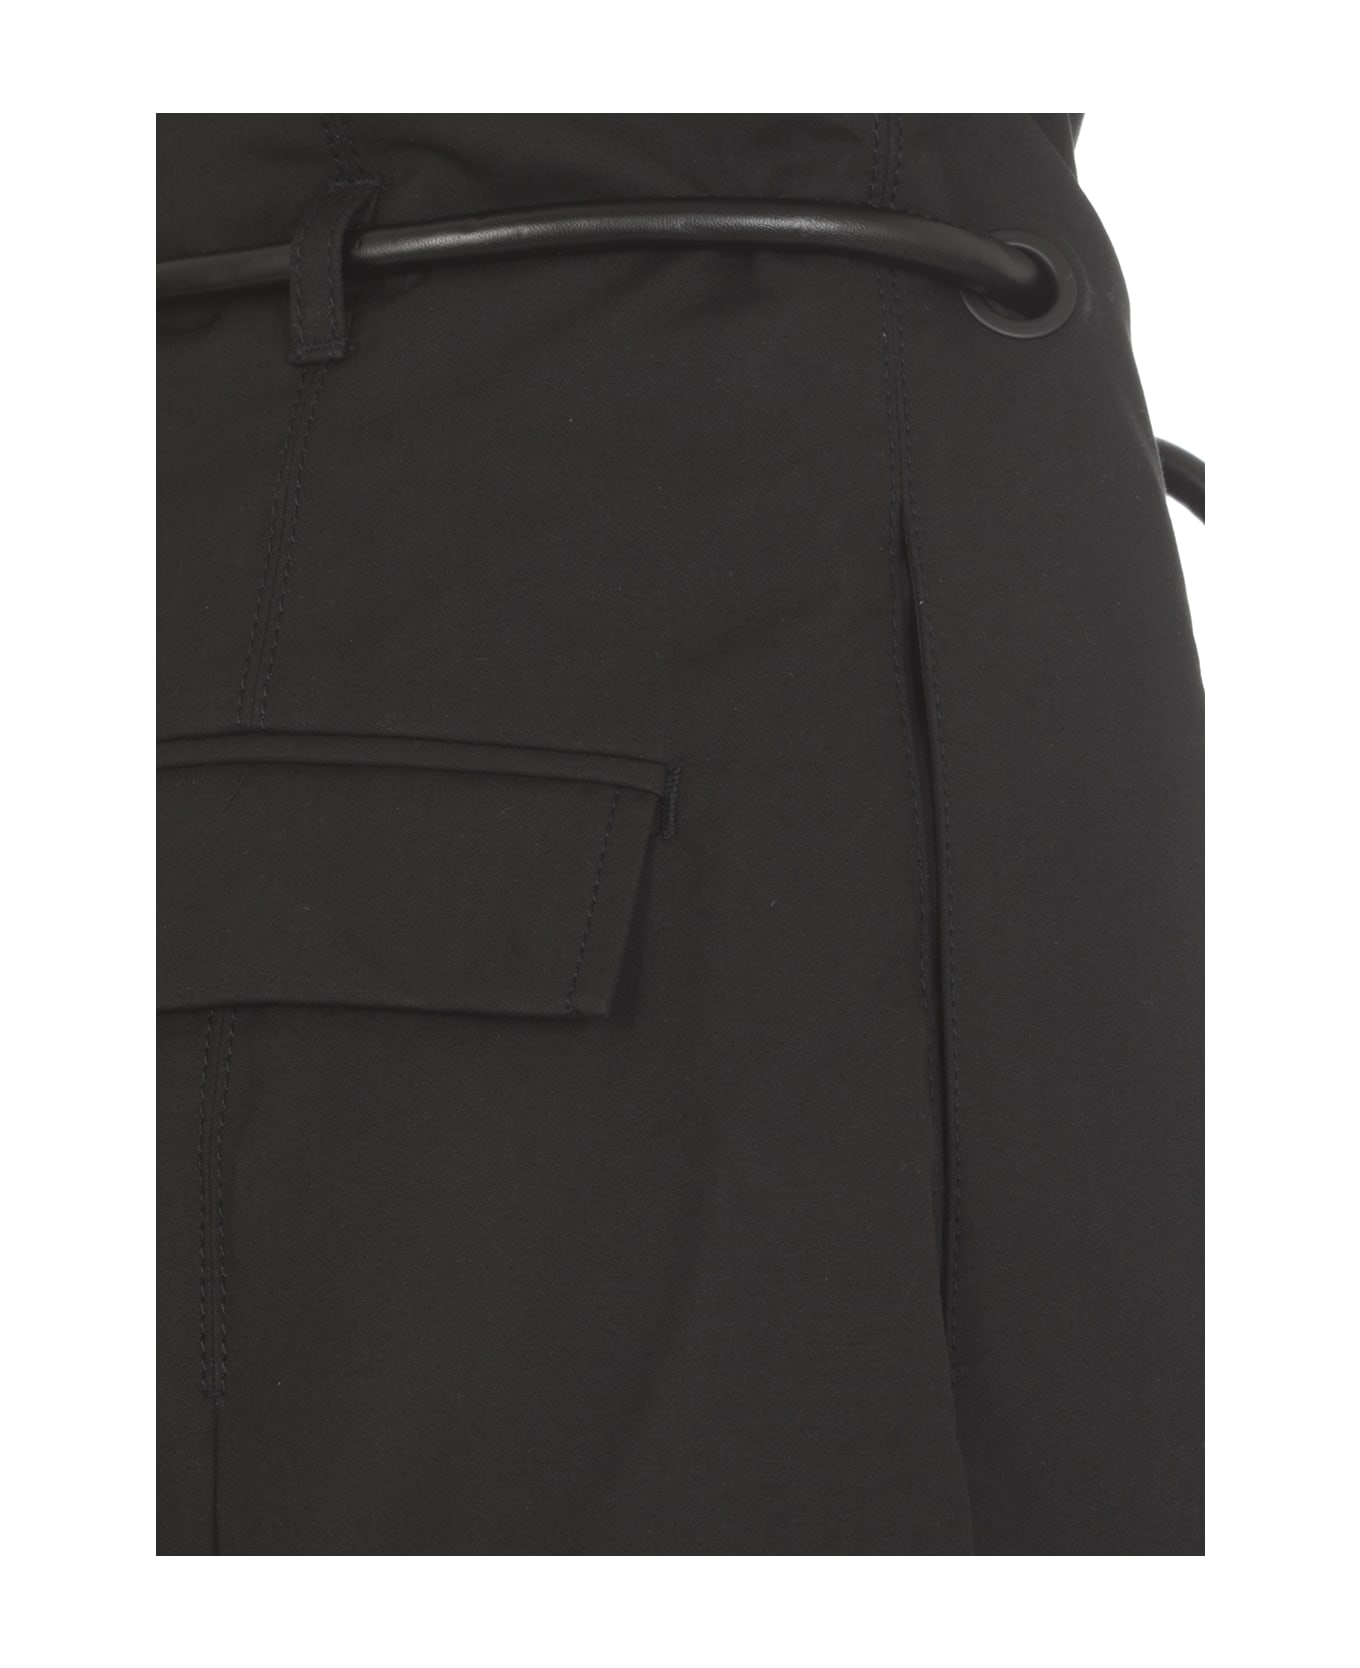 3.1 Phillip Lim Origami Skirt - Black